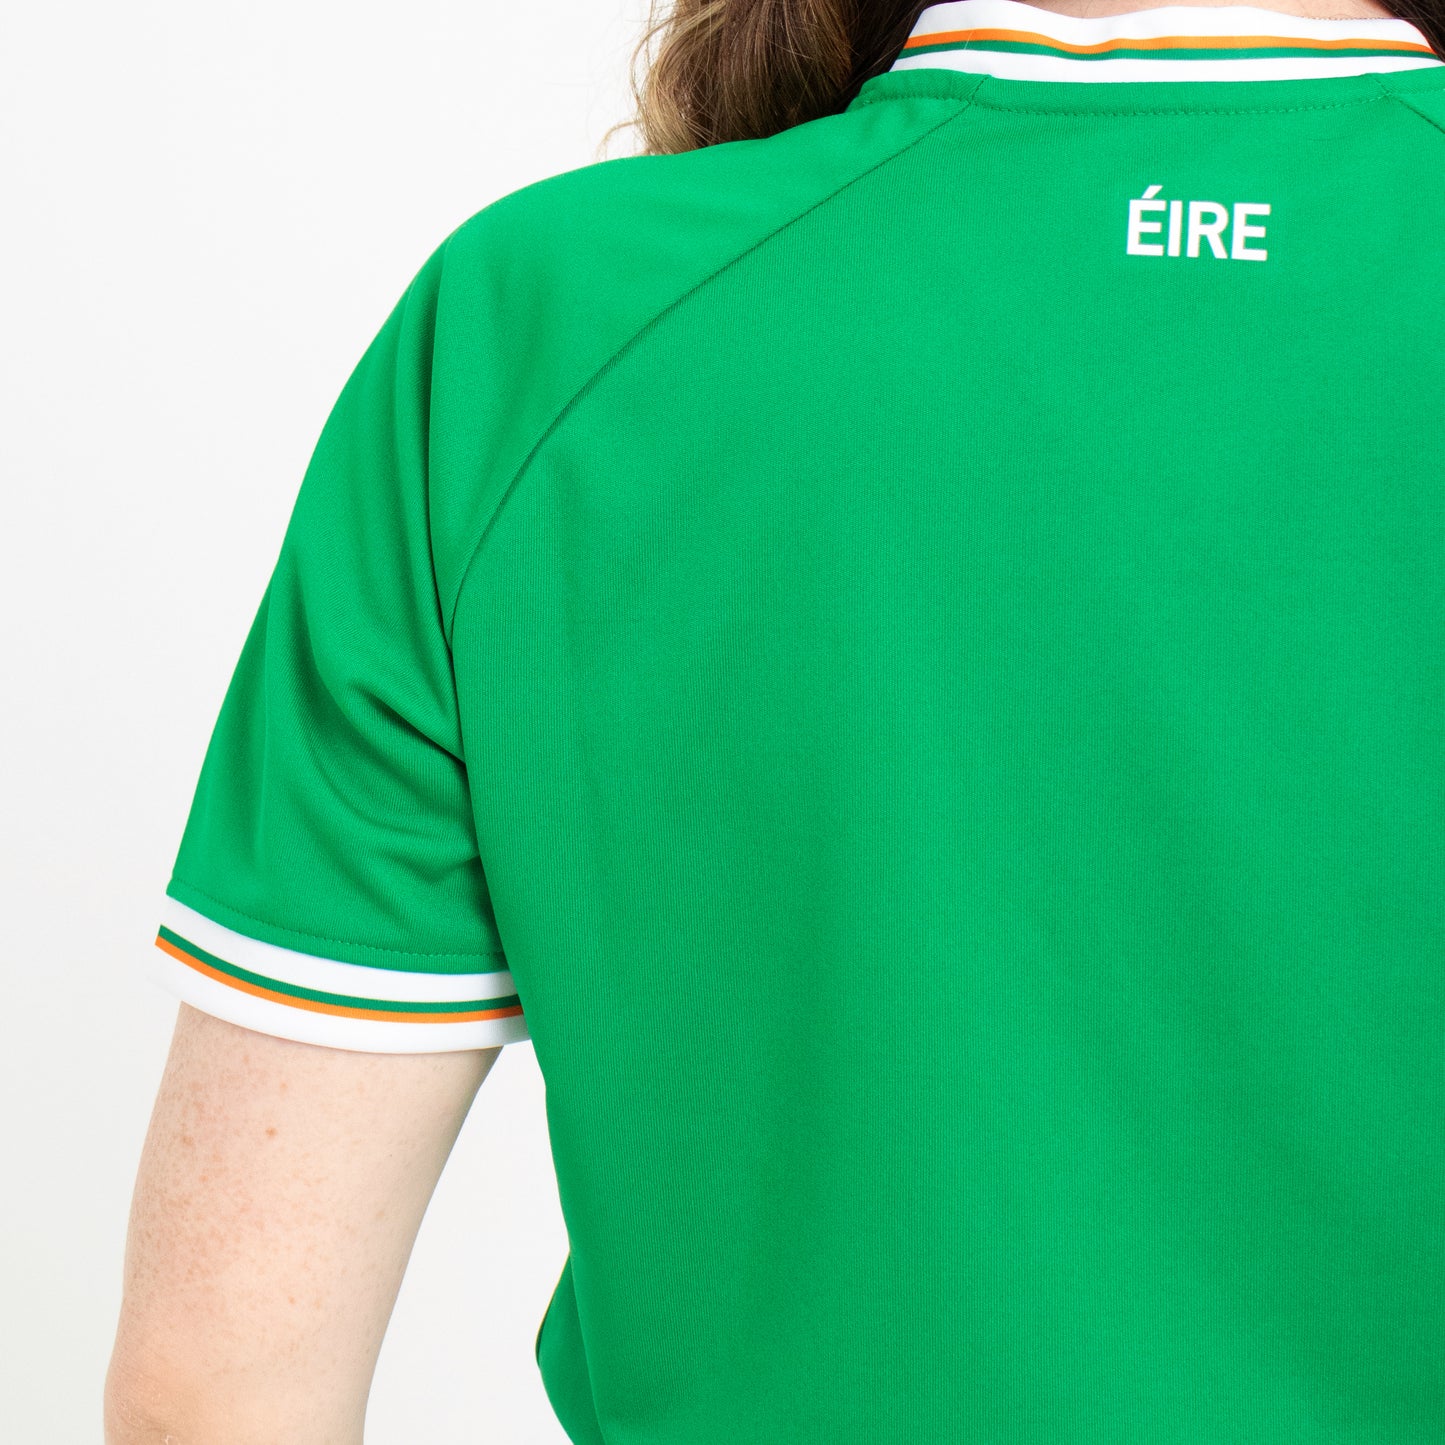 Ierland Castore Stadium Curved Fit shirt 2023